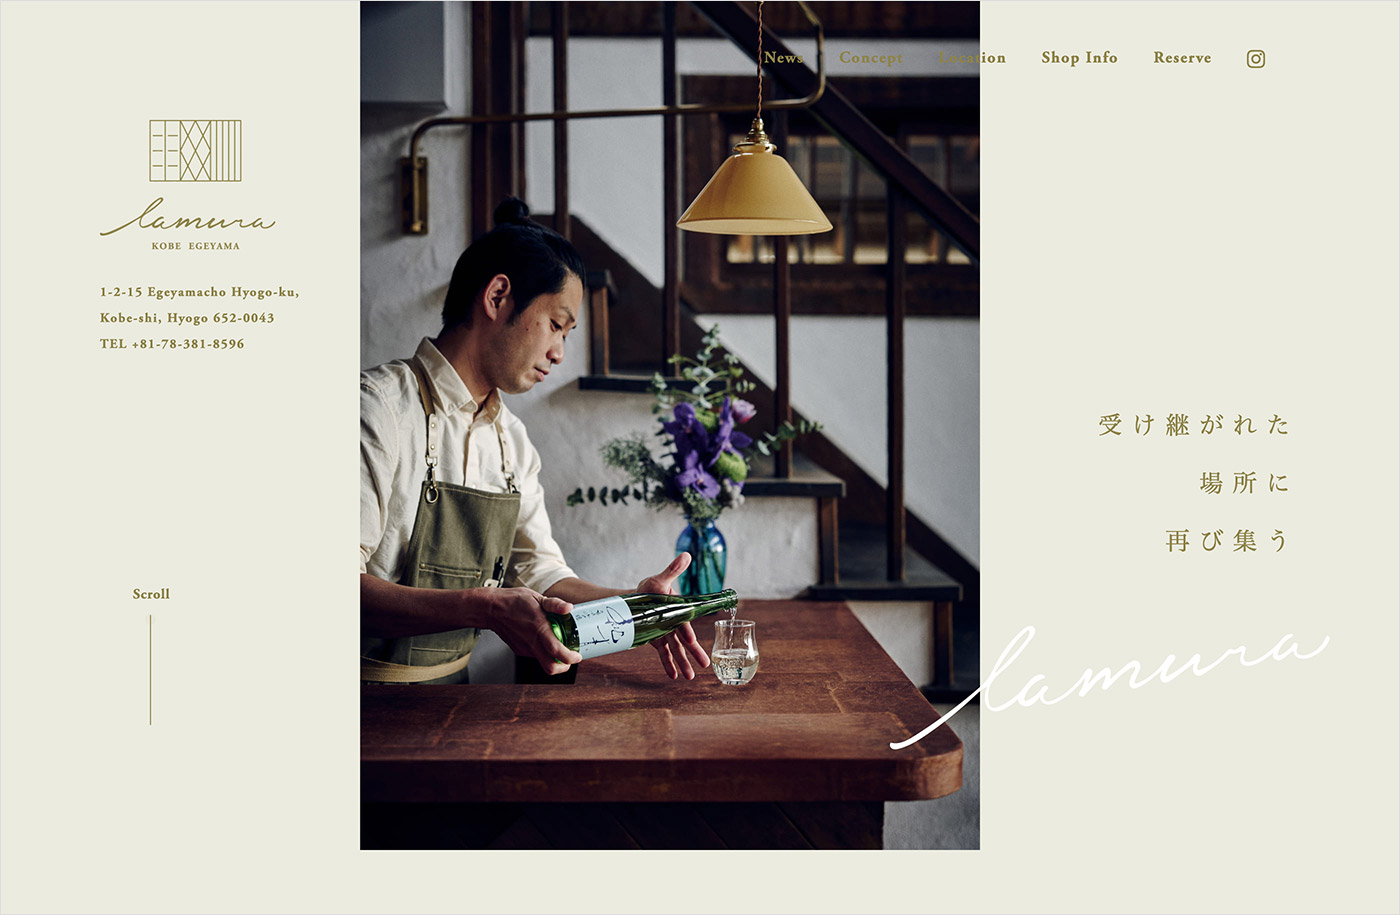 la mura 神戸会下山｜登録有形文化財の古民家レストランウェブサイトの画面キャプチャ画像